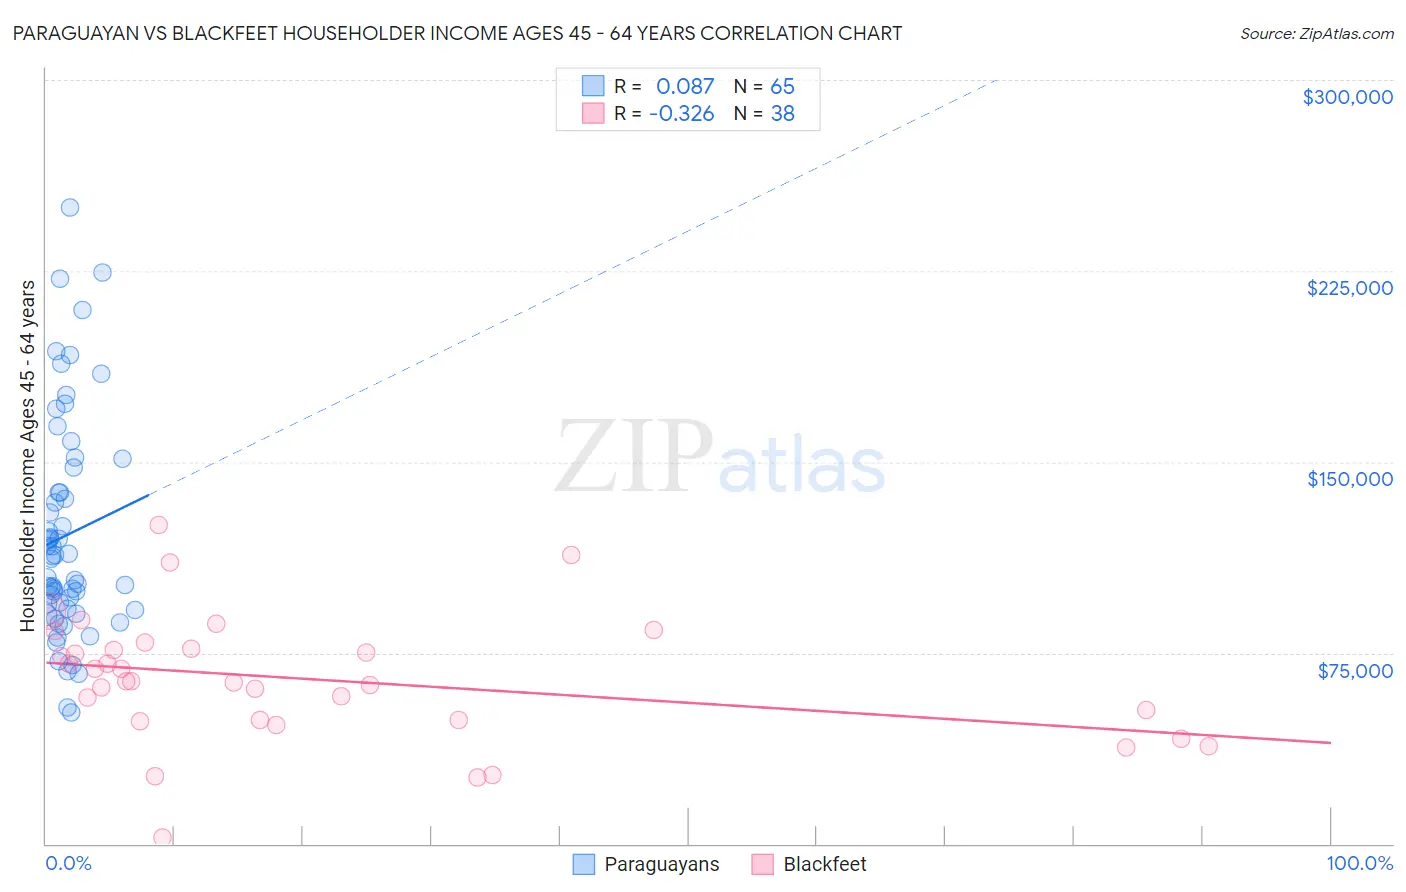 Paraguayan vs Blackfeet Householder Income Ages 45 - 64 years